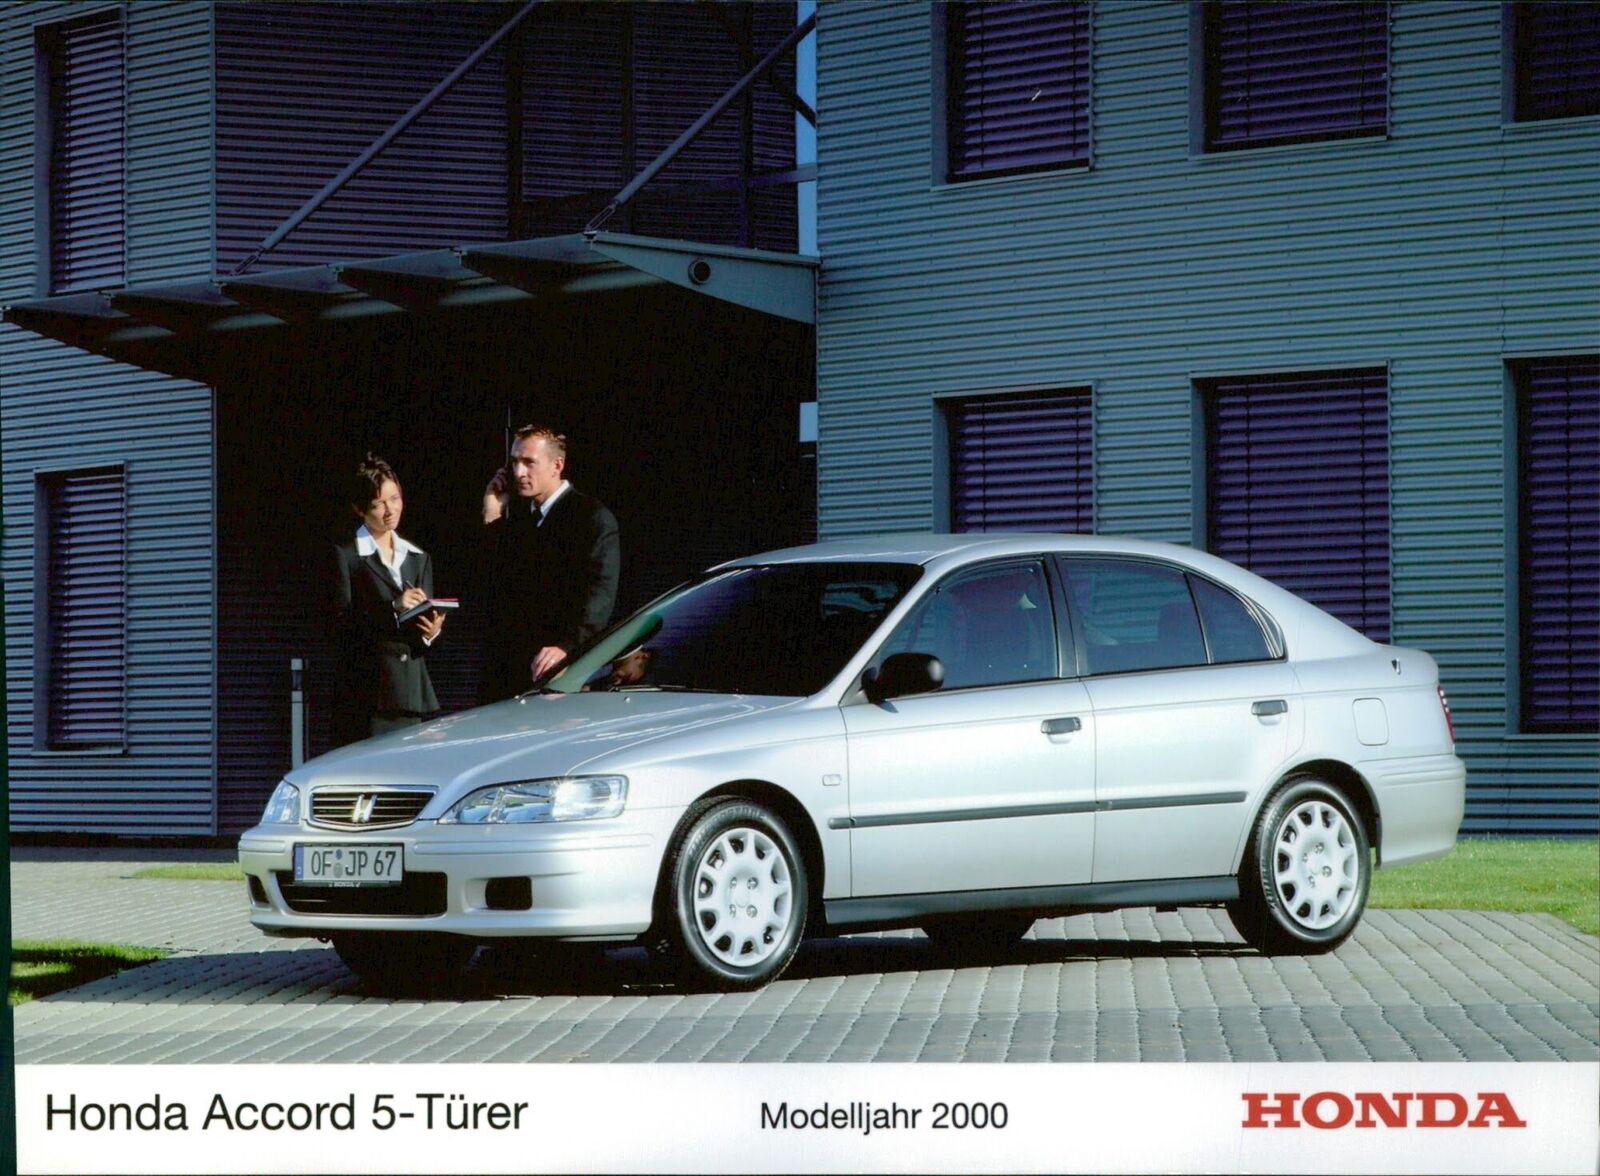 2000 Honda Accord 5-door - Vintage Photograph 3460005